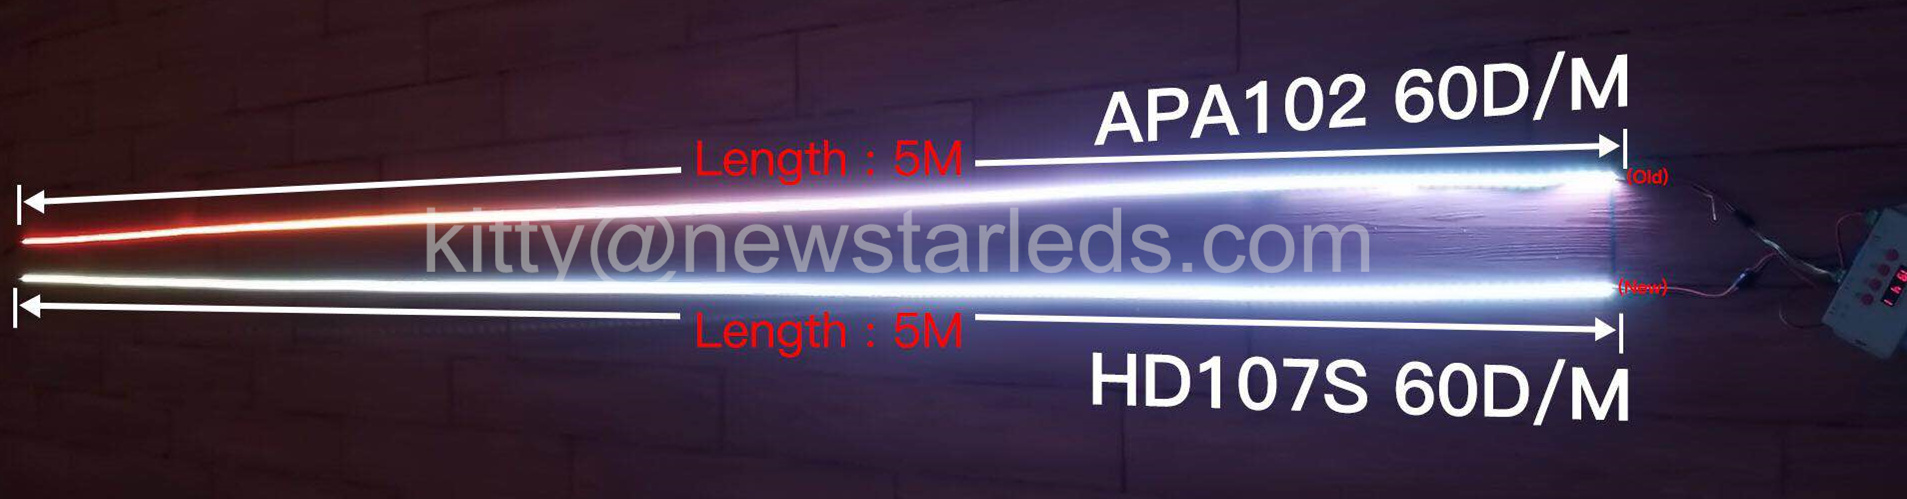 APA102 LED Strip comparing to HD107S LED Strip Light.jpg